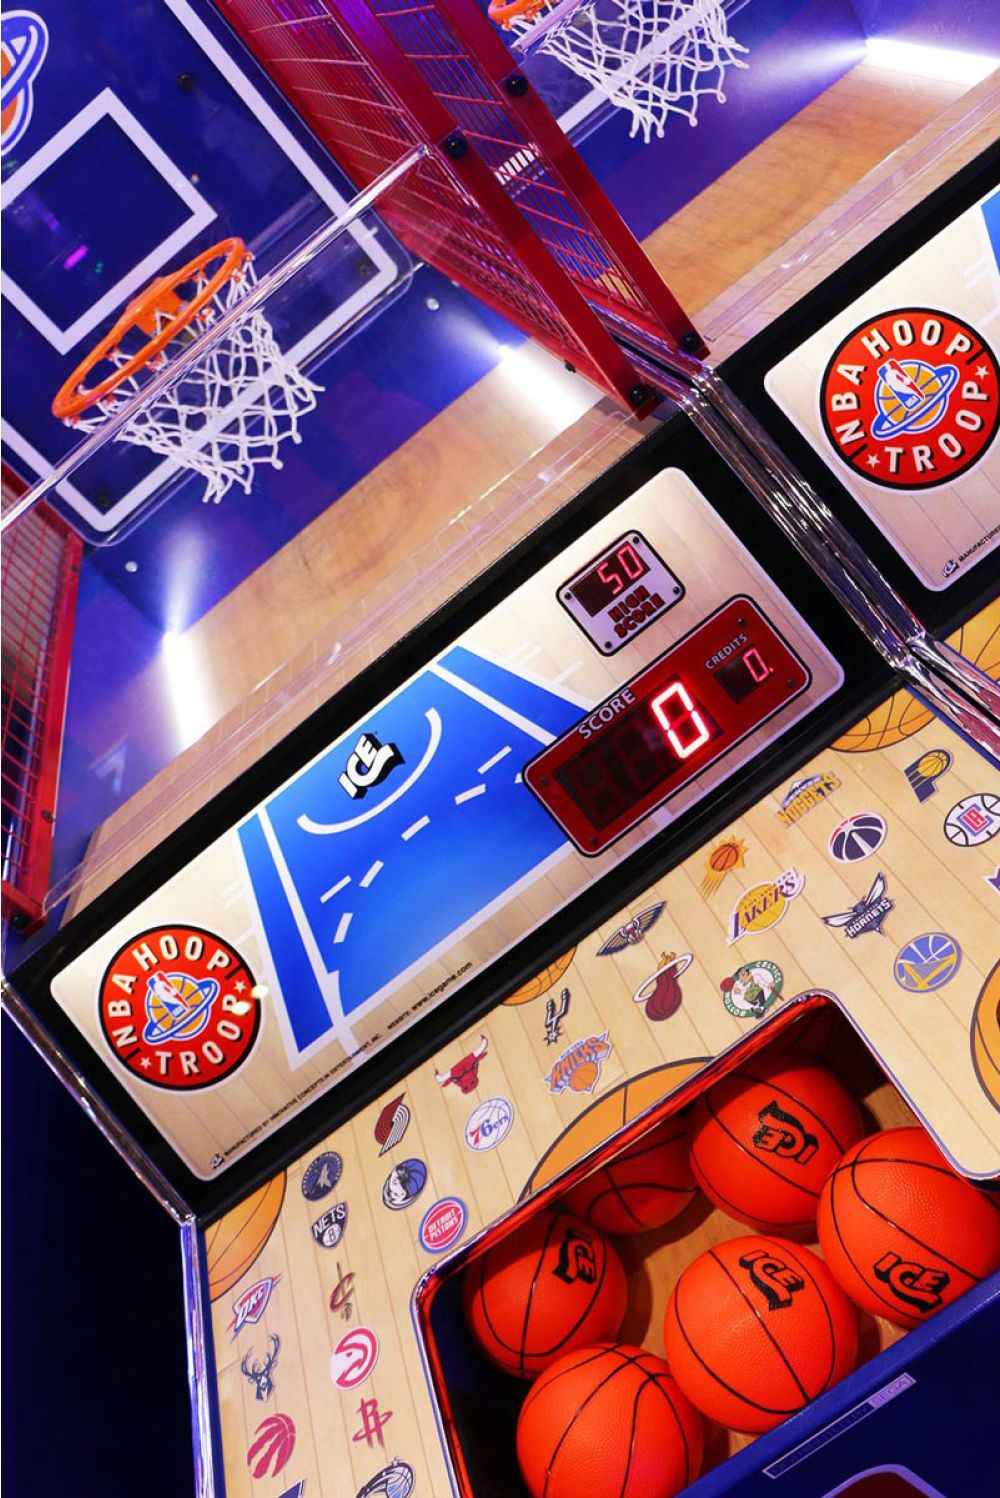 NBA Hoops, Trade Show Games